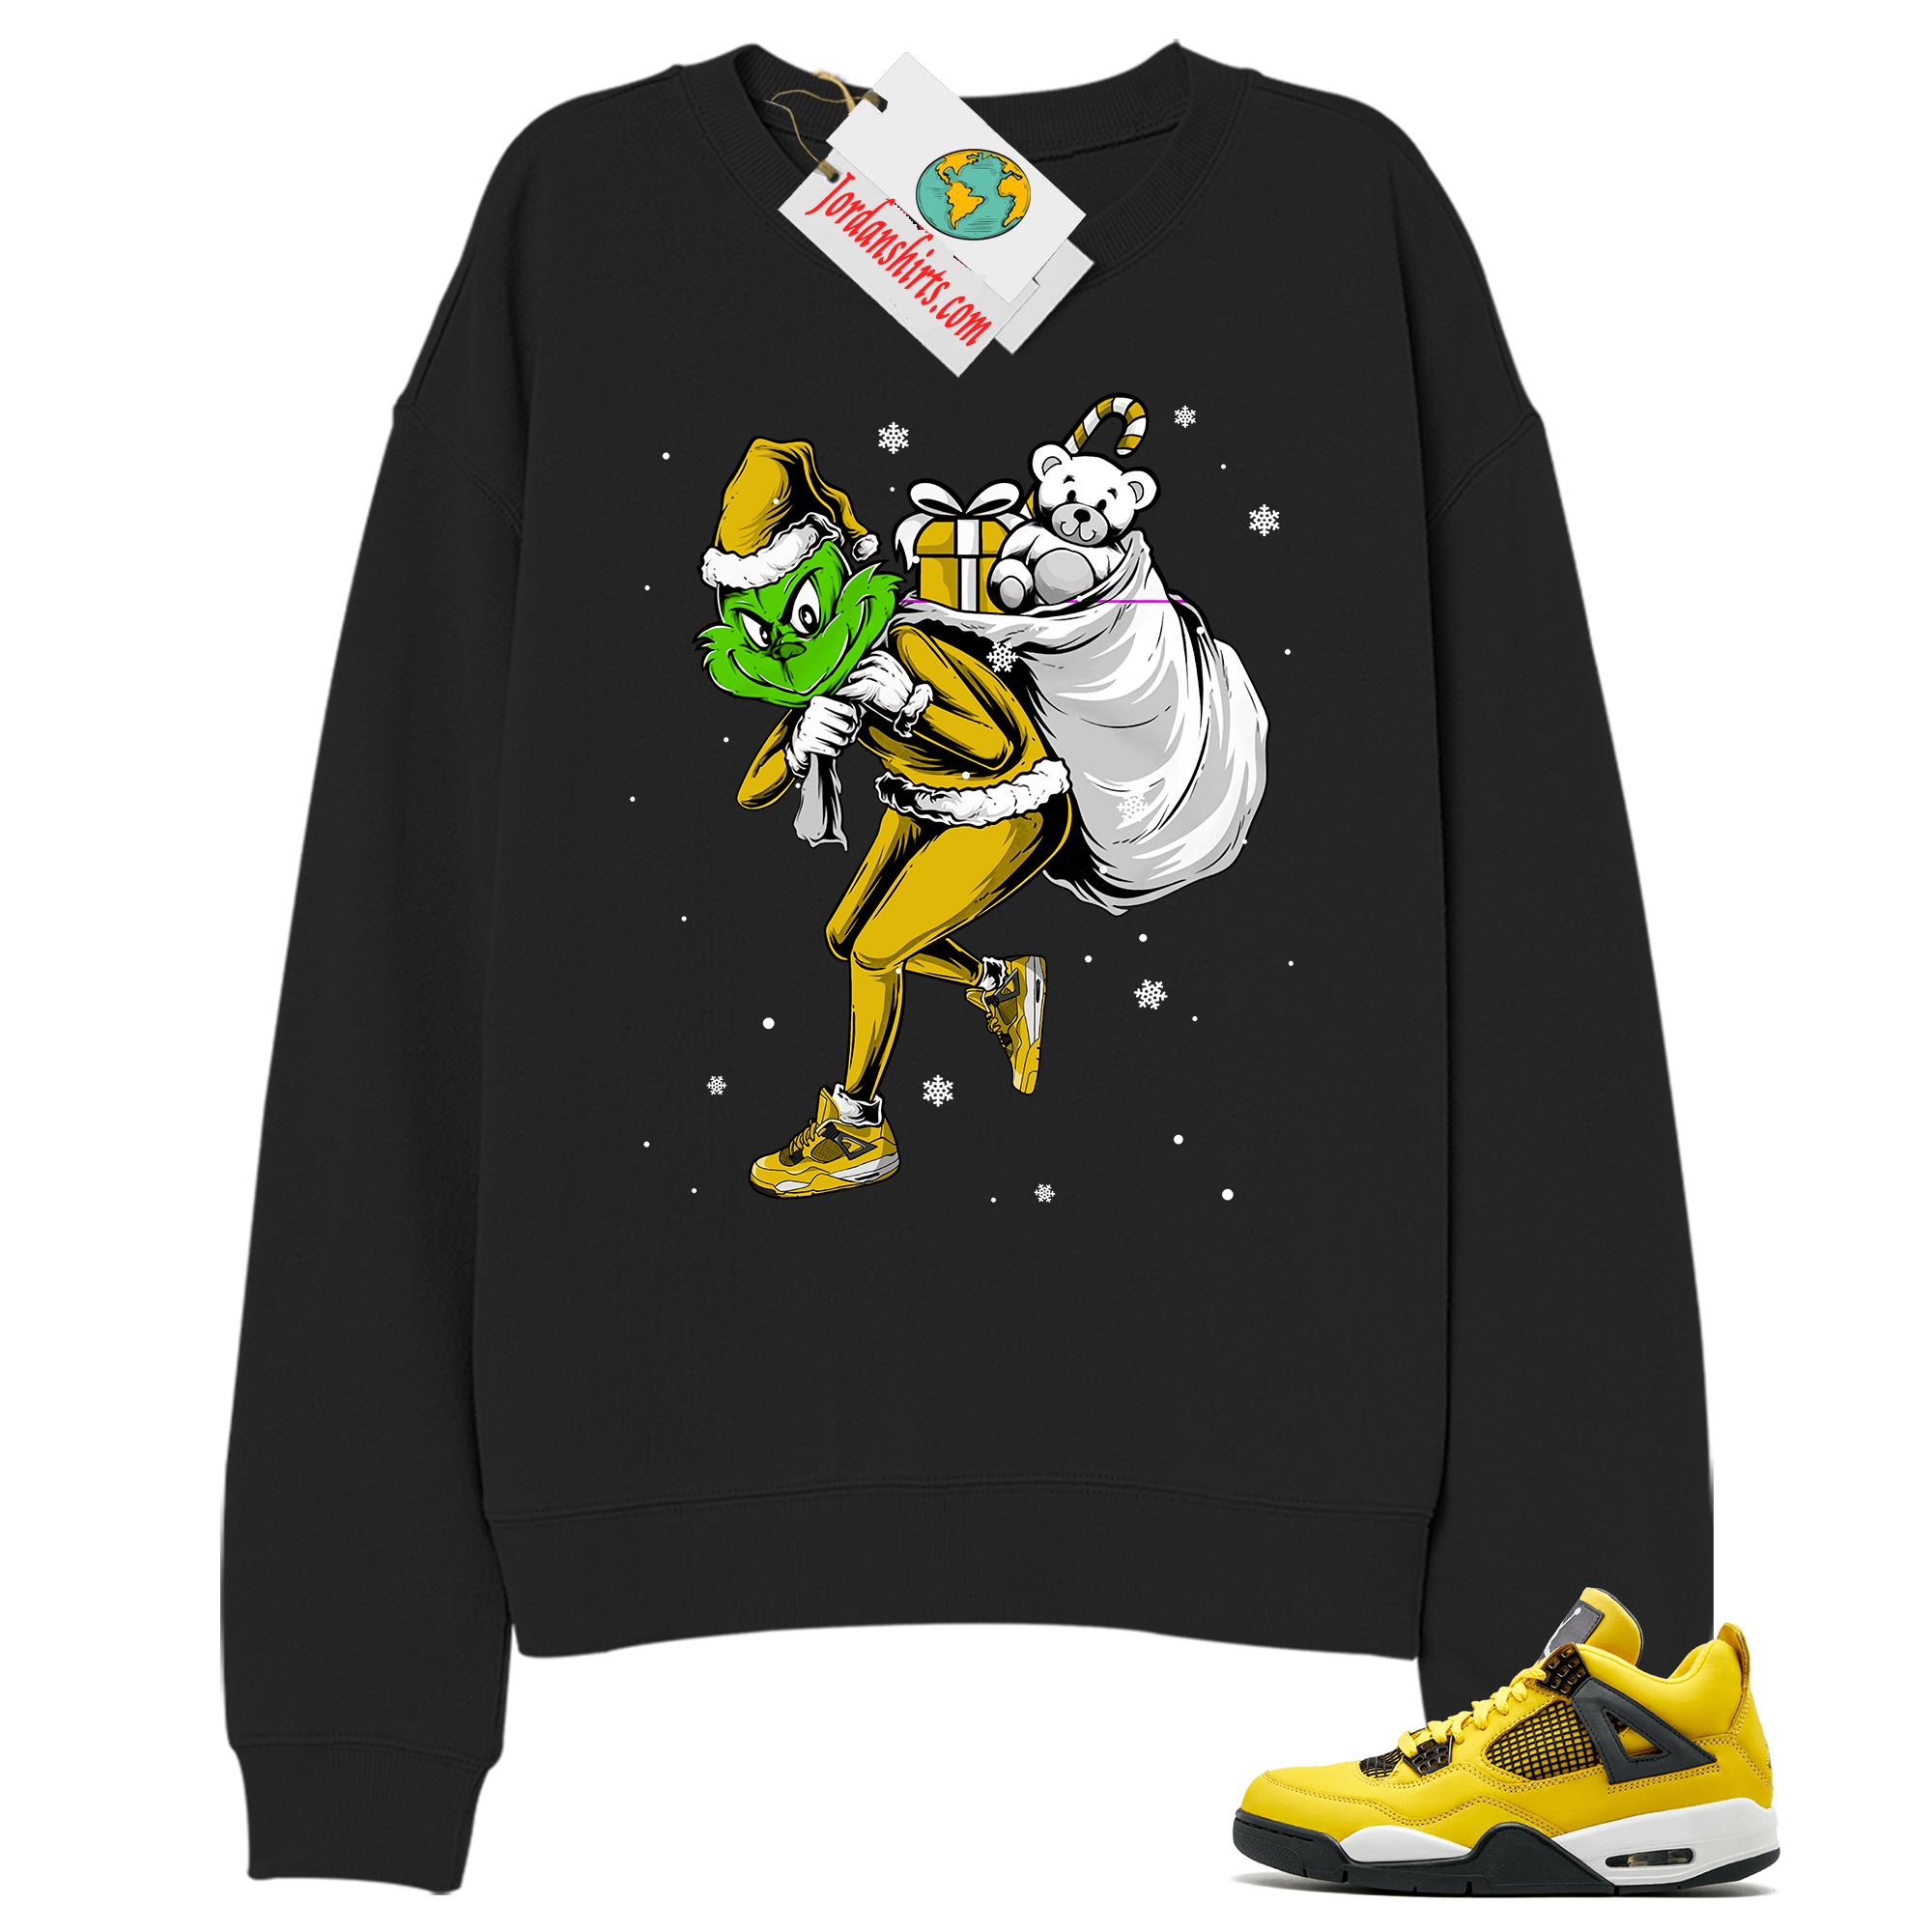 Jordan 4 Sweatshirt, Grinch Stolen Christmas Black Sweatshirt Air Jordan 4 Tour Yellow Lightning 4s Size Up To 5xl